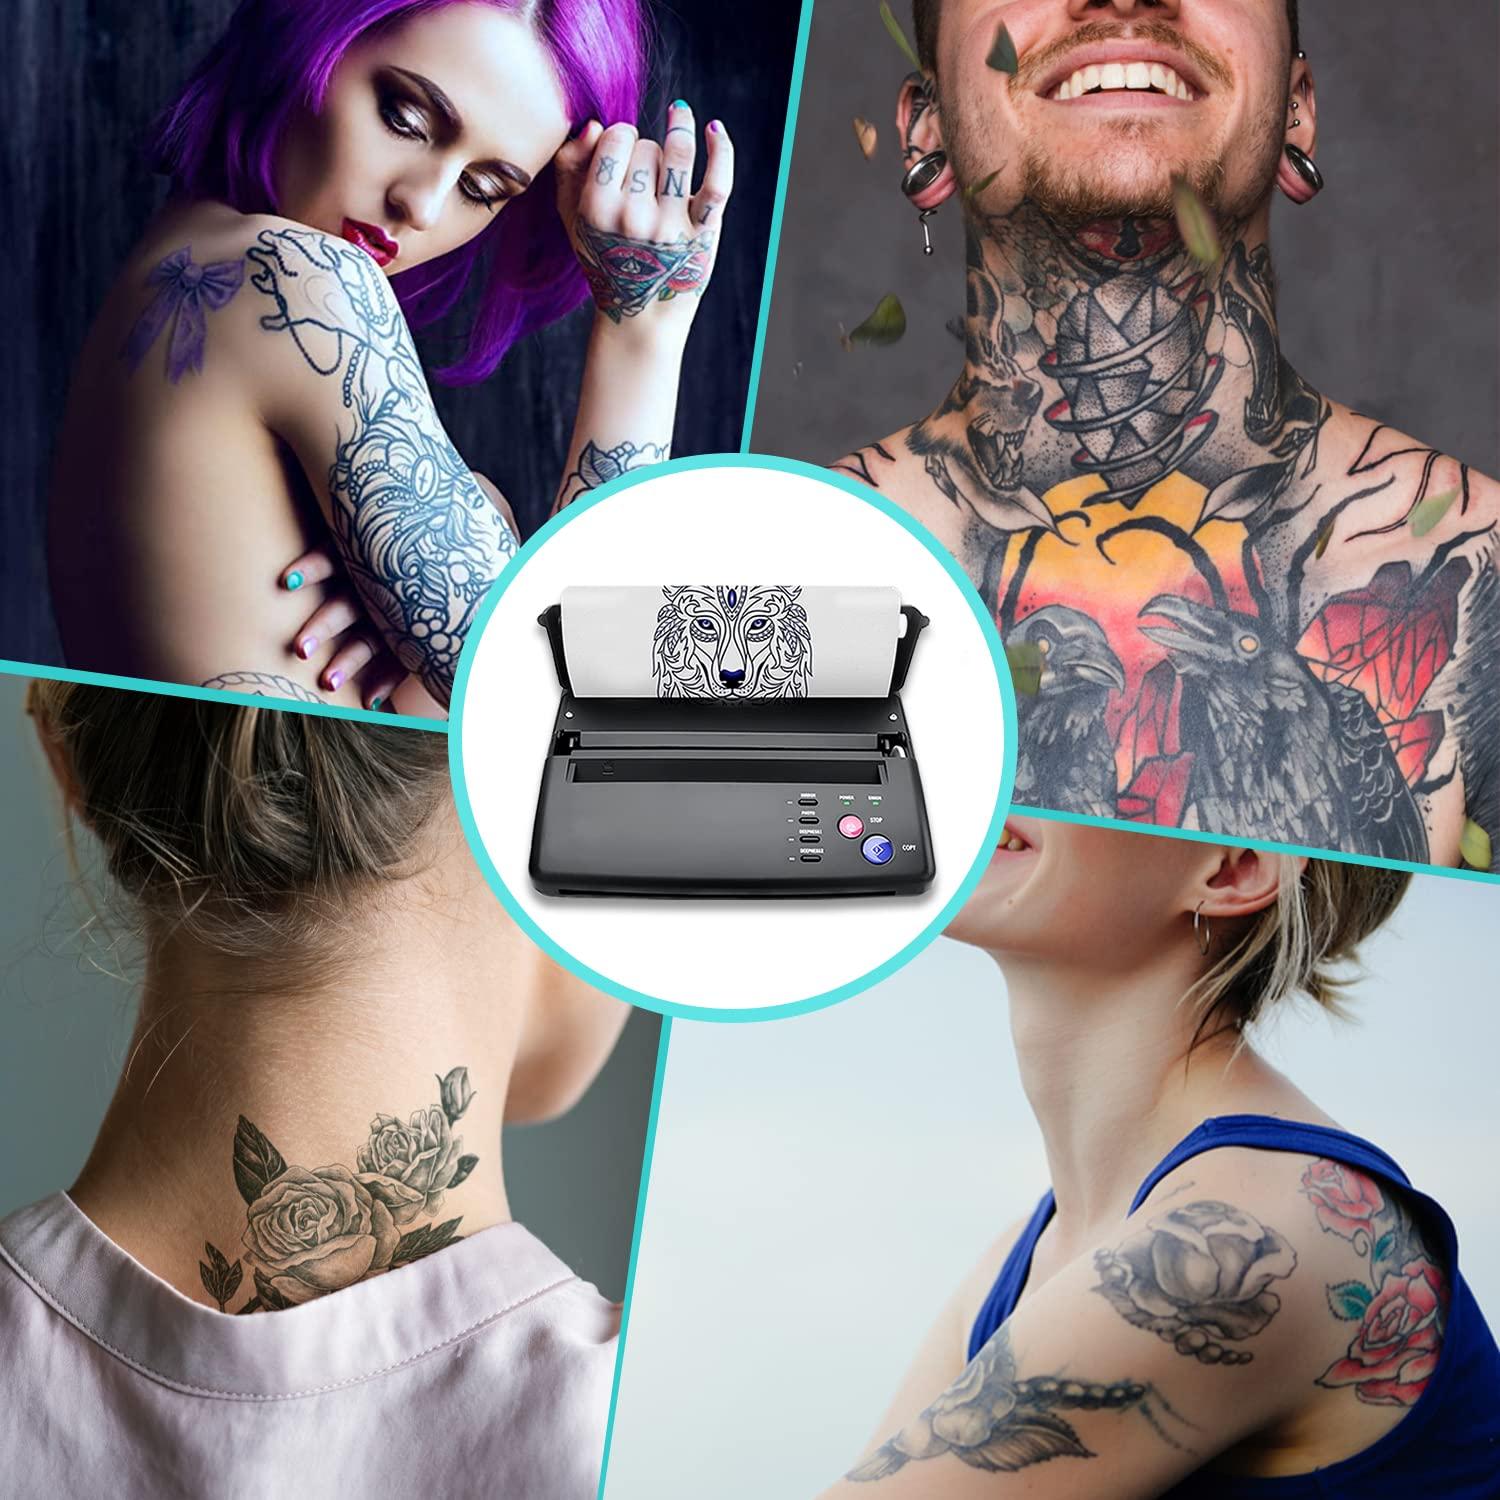 Atelics Tattoo Transfer Stencil Machine Thermal Copier Printer with 20 Pcs Transfer  Paper Tattoo Stencil Printer Tattoo for Temporary and Permanent Tattoos  Black Update Version